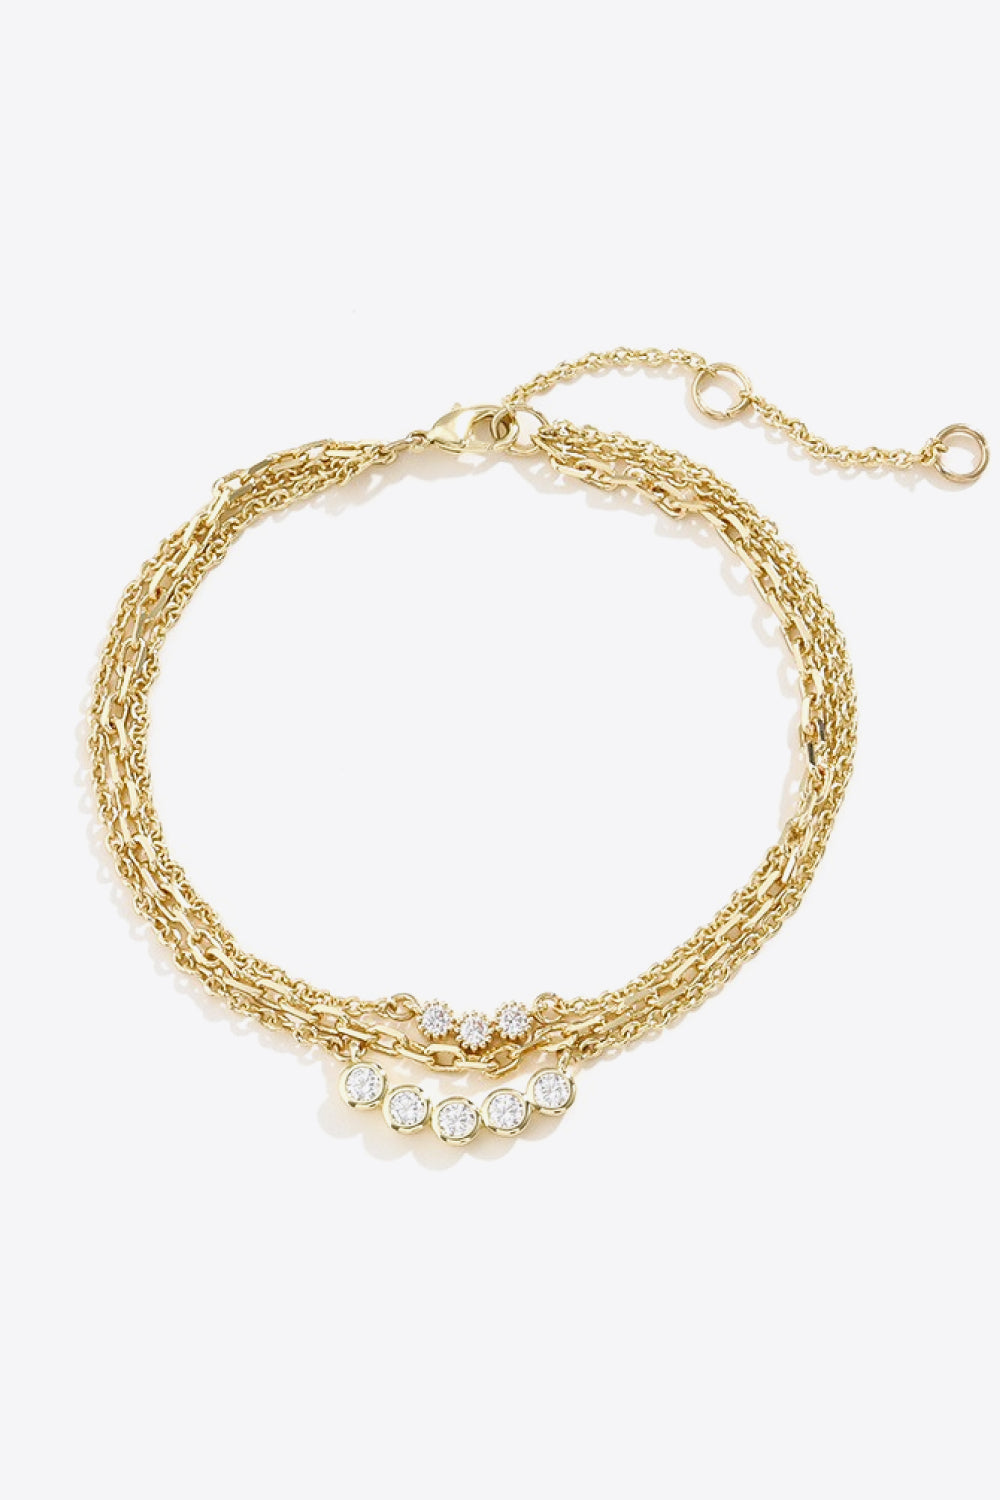 Zircon Layered Bracelet - Women’s Jewelry - Bracelets - 2 - 2024